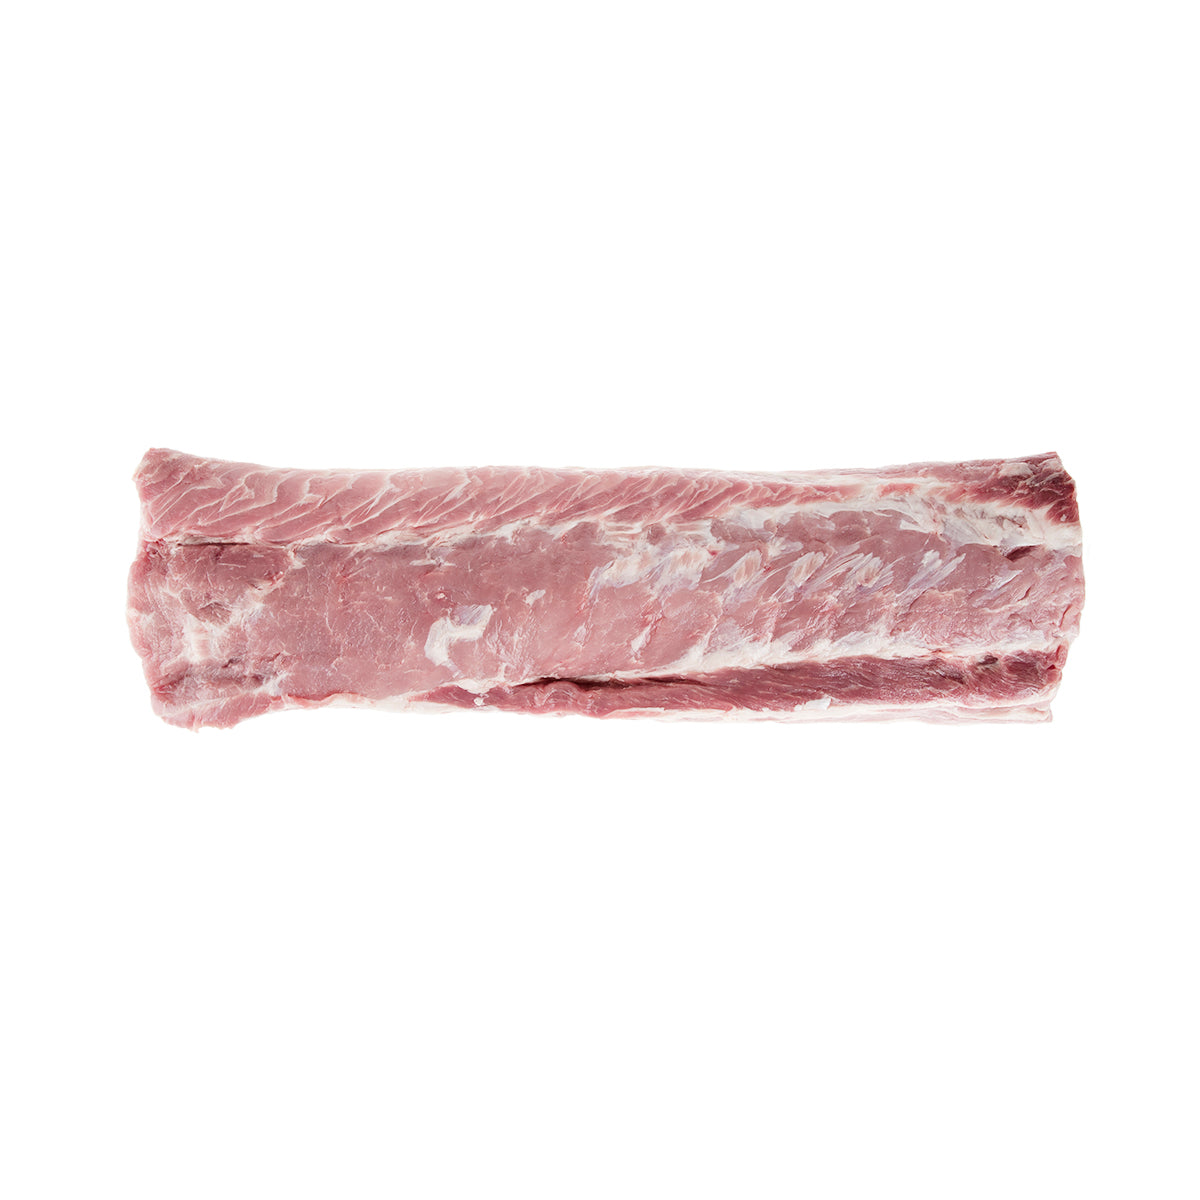 Les Viandes Du Breton Certified Humane Boneless Pork Loins